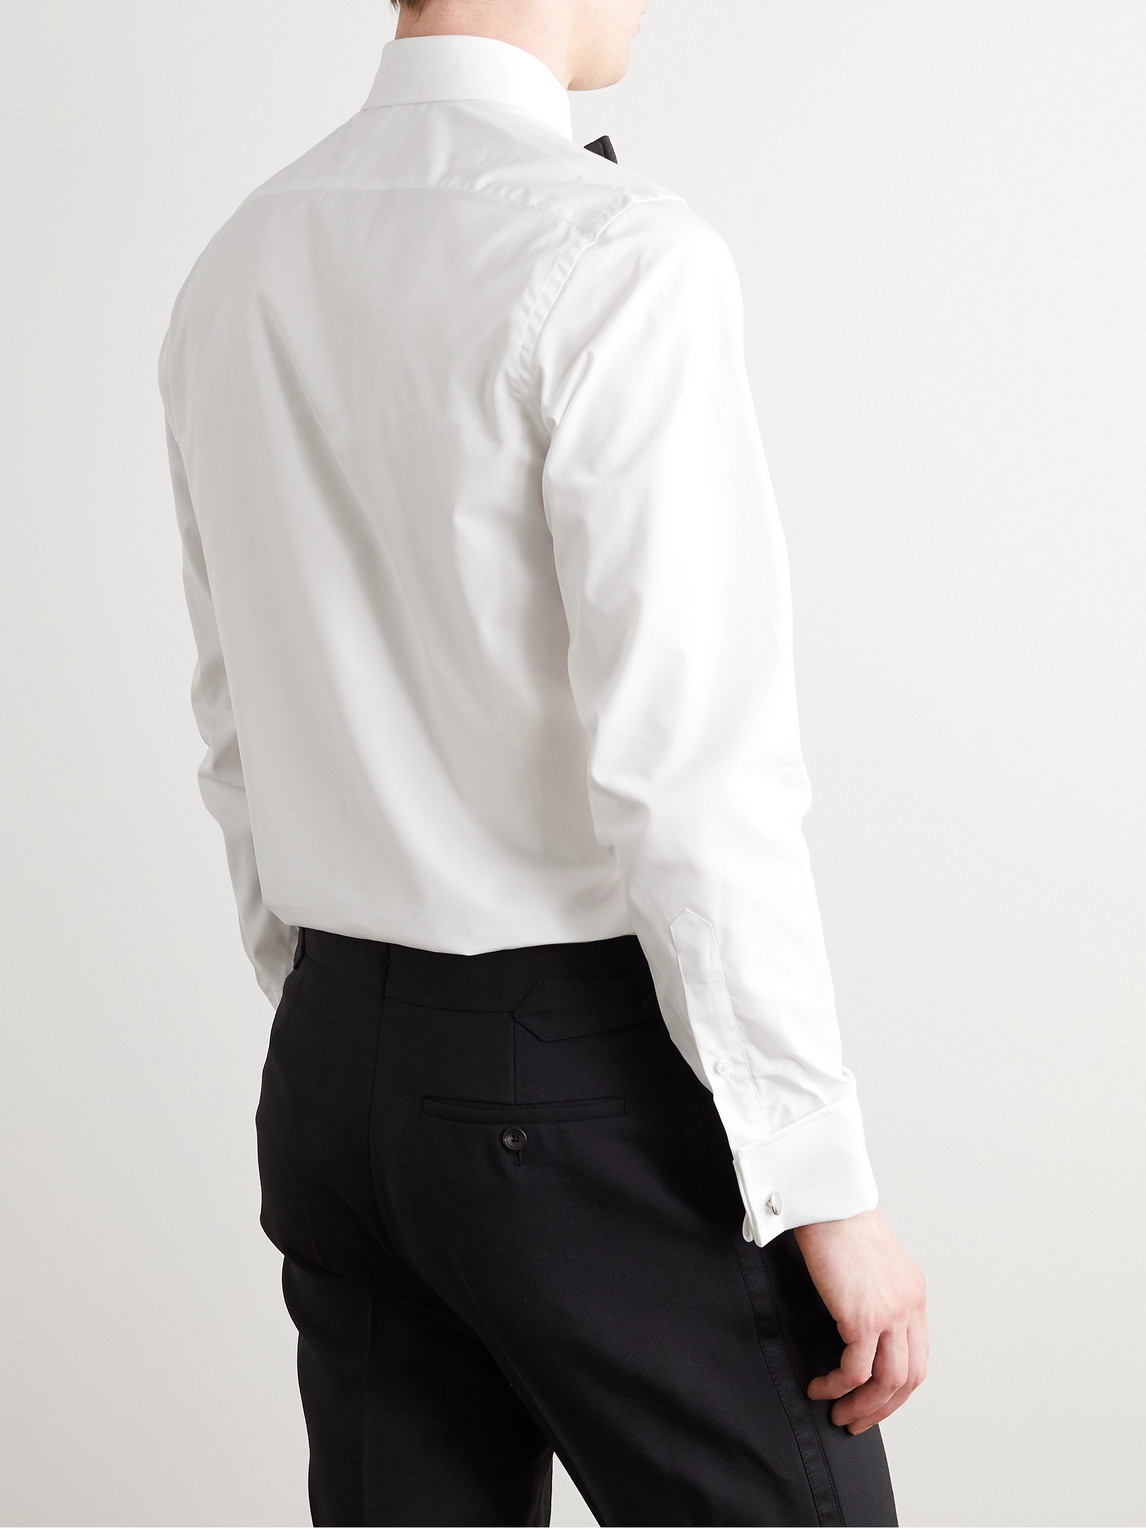 Shop Kingsman Turnbull & Asser White Bib-front Cotton Tuxedo Shirt